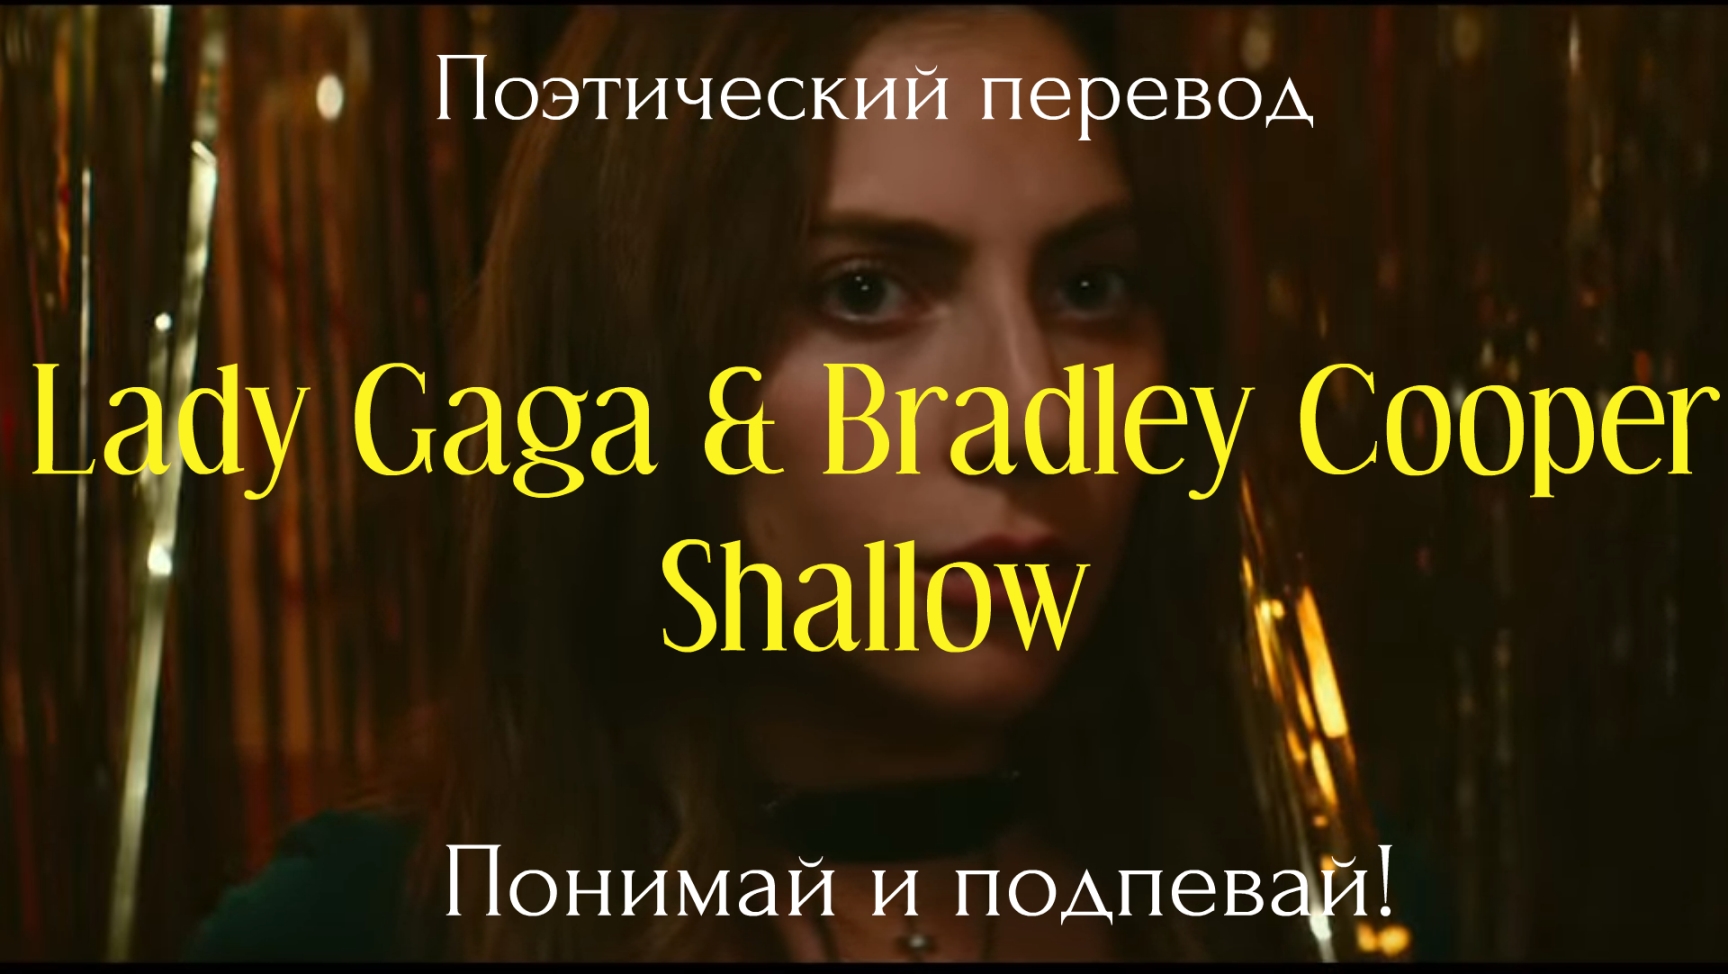 Damsel перевод на русский. Lady Gaga, Bradley Cooper shallow перевод. Слова леди Гага и Брэдли Купер. Леди Гага и Брэдли Купер песня текст. Shallow перевод.